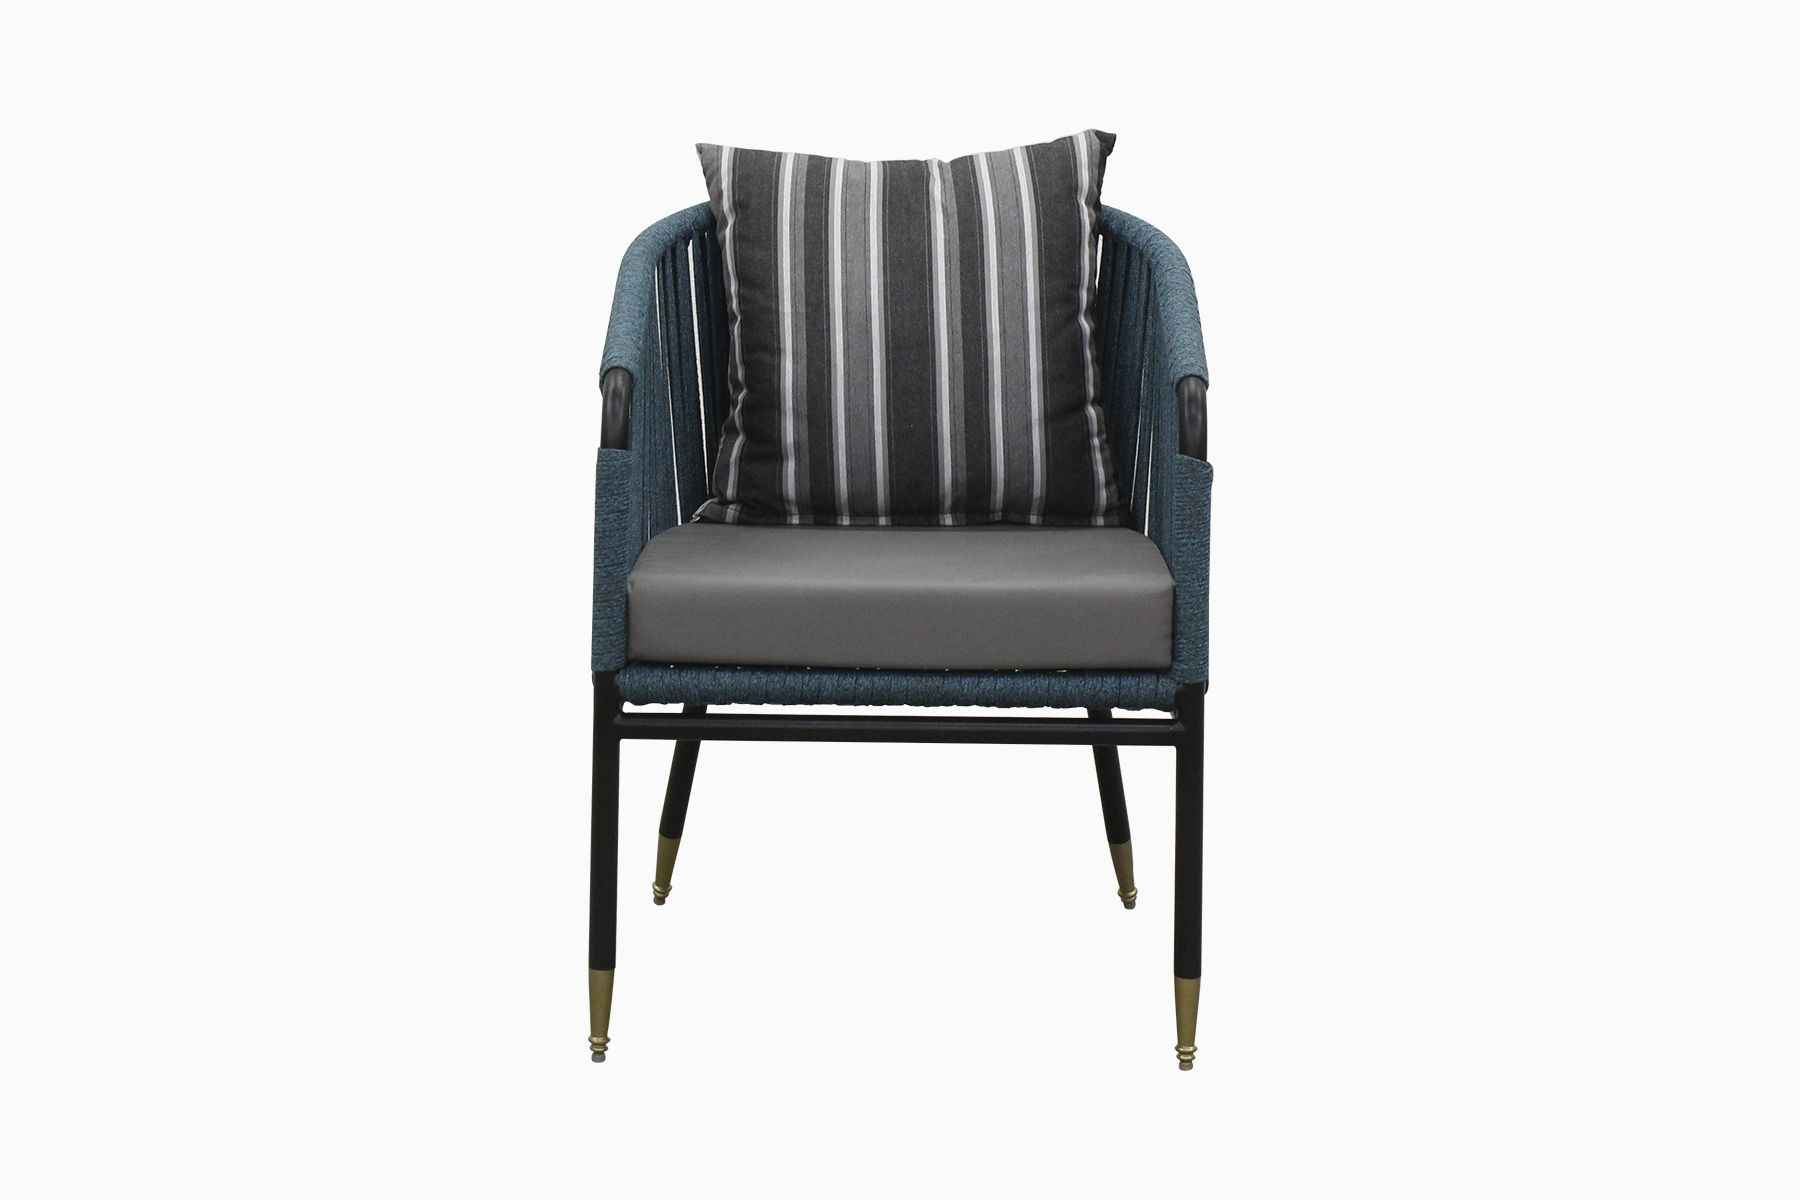 Patio Blue Folding Chair